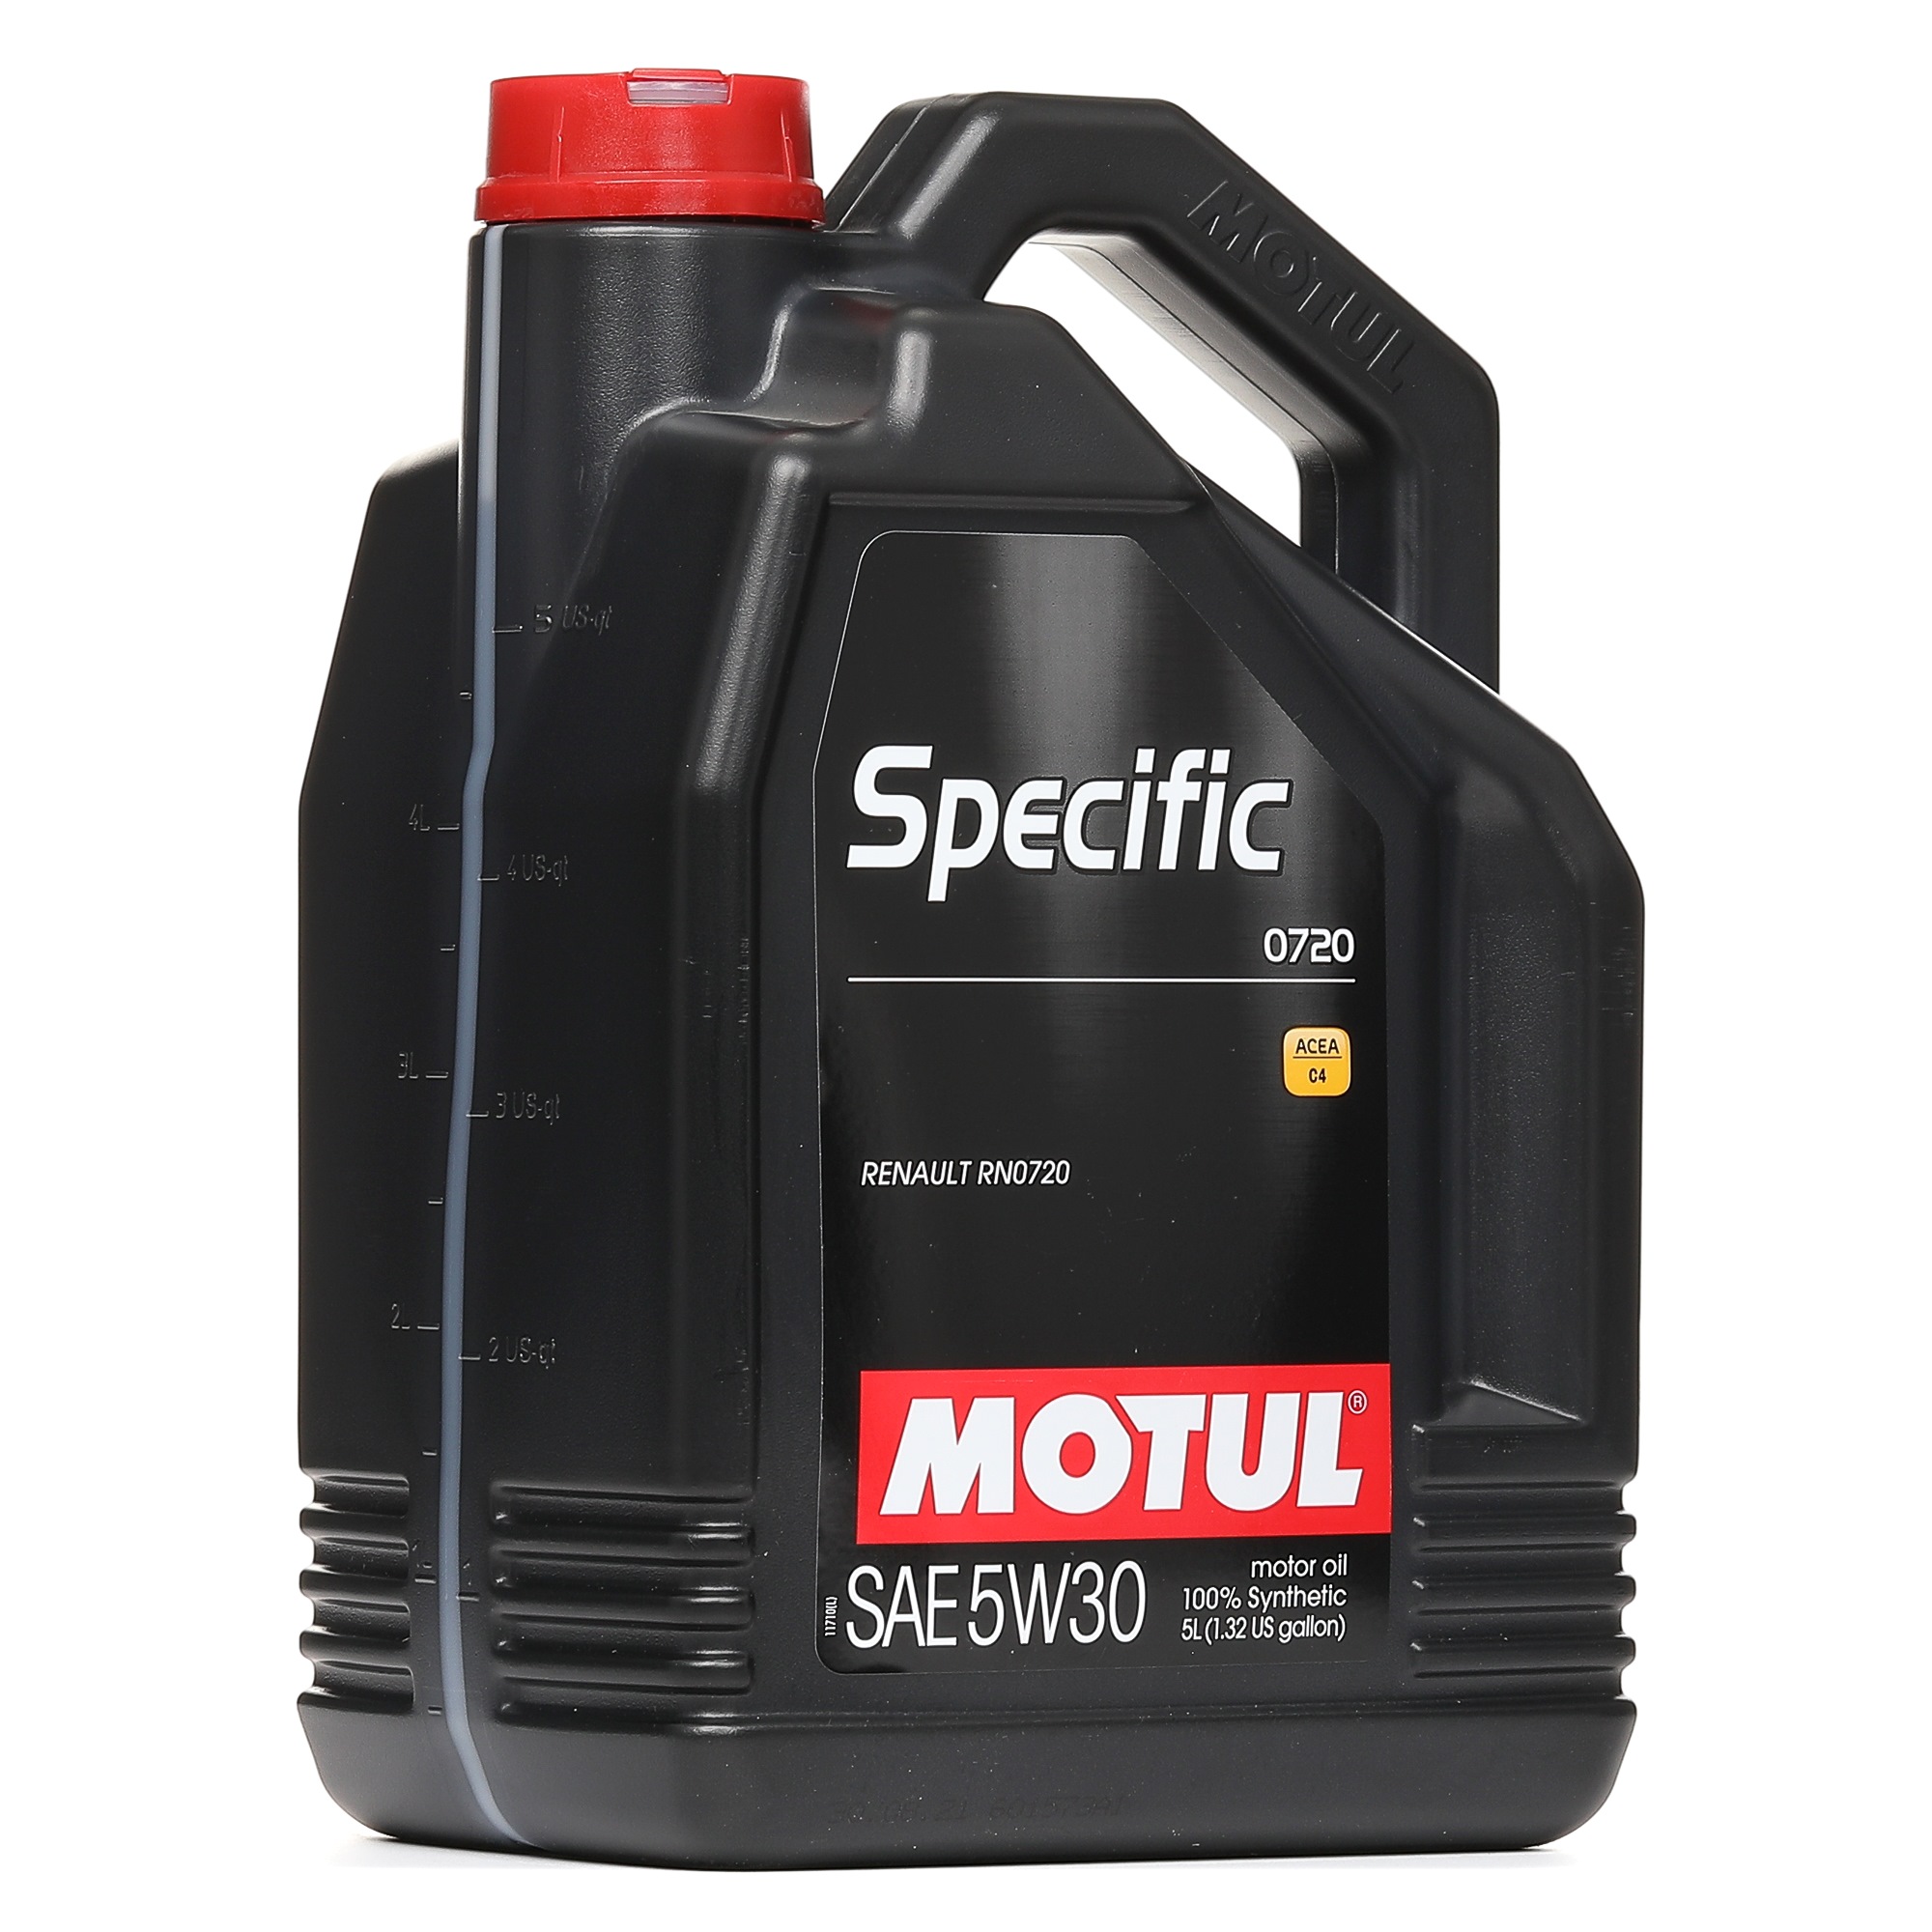 MOTUL SPECIFIC, 0720 109241 Engine oil 5W-30, 5l